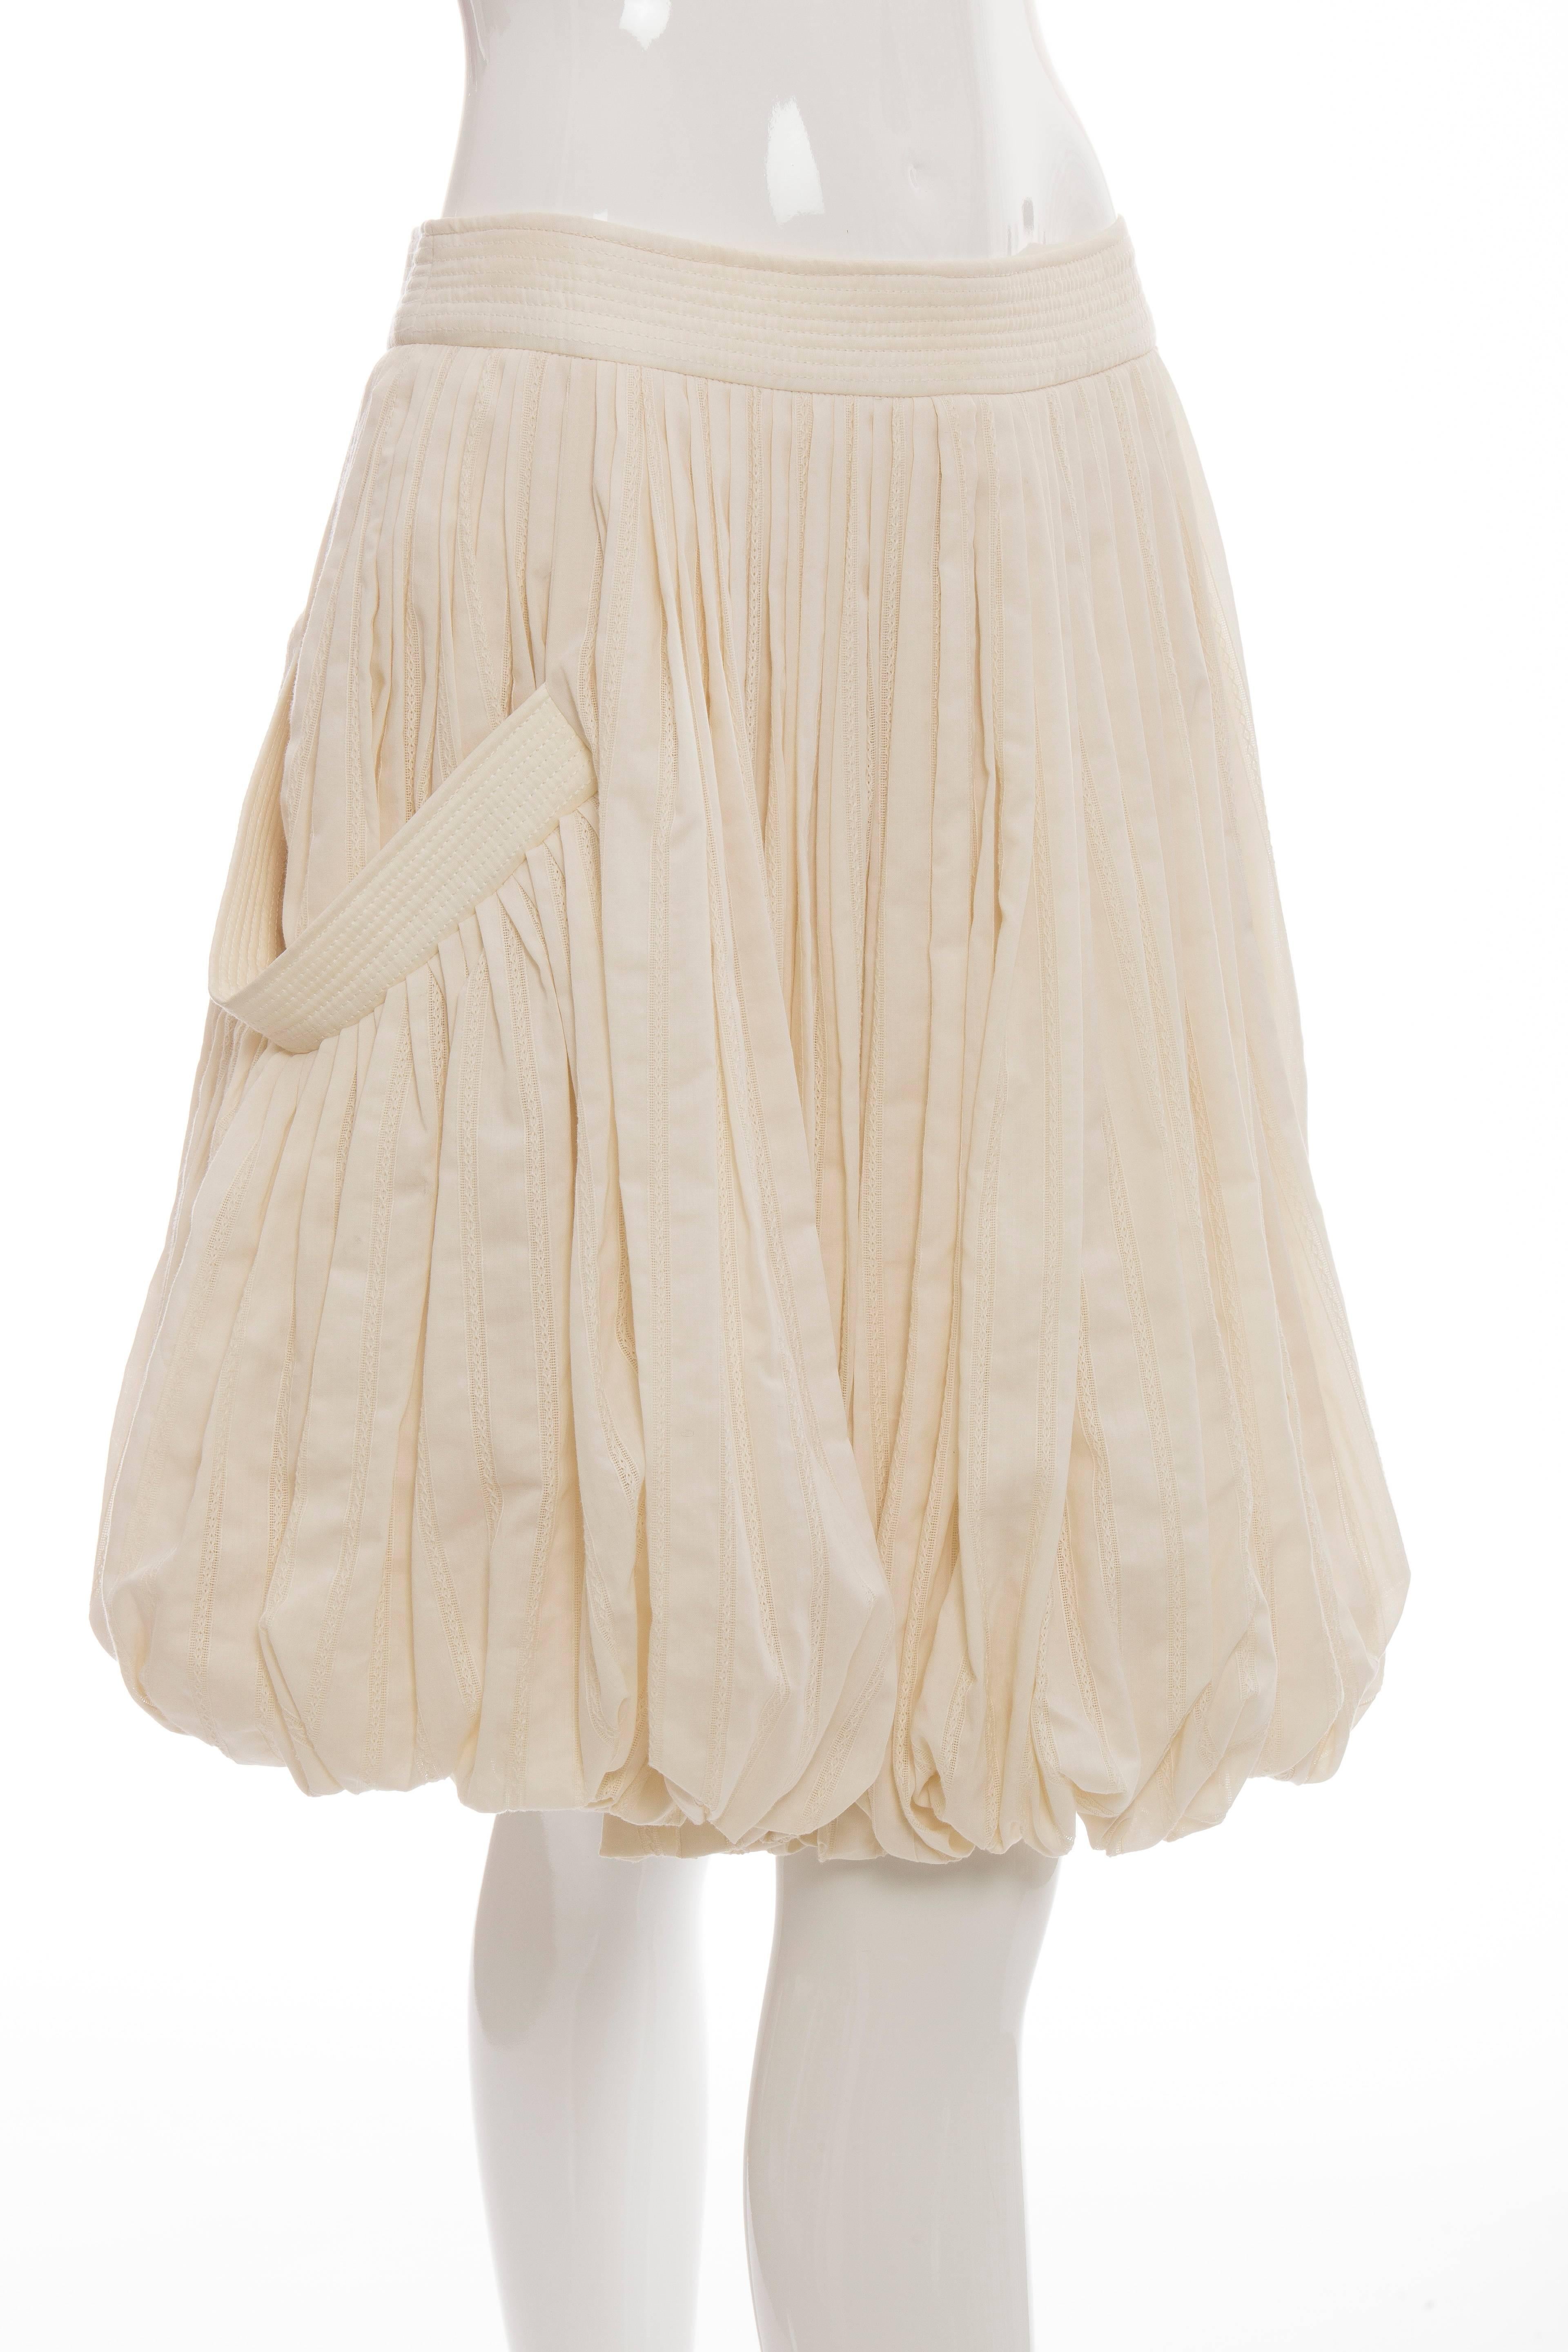 Alexander McQueen, Spring-Summer 2006 cream pleated cotton skirt with two side deep pockets, side zipper and cotton lining.  

EU. 42
US. 6

Waist 30, Length 23